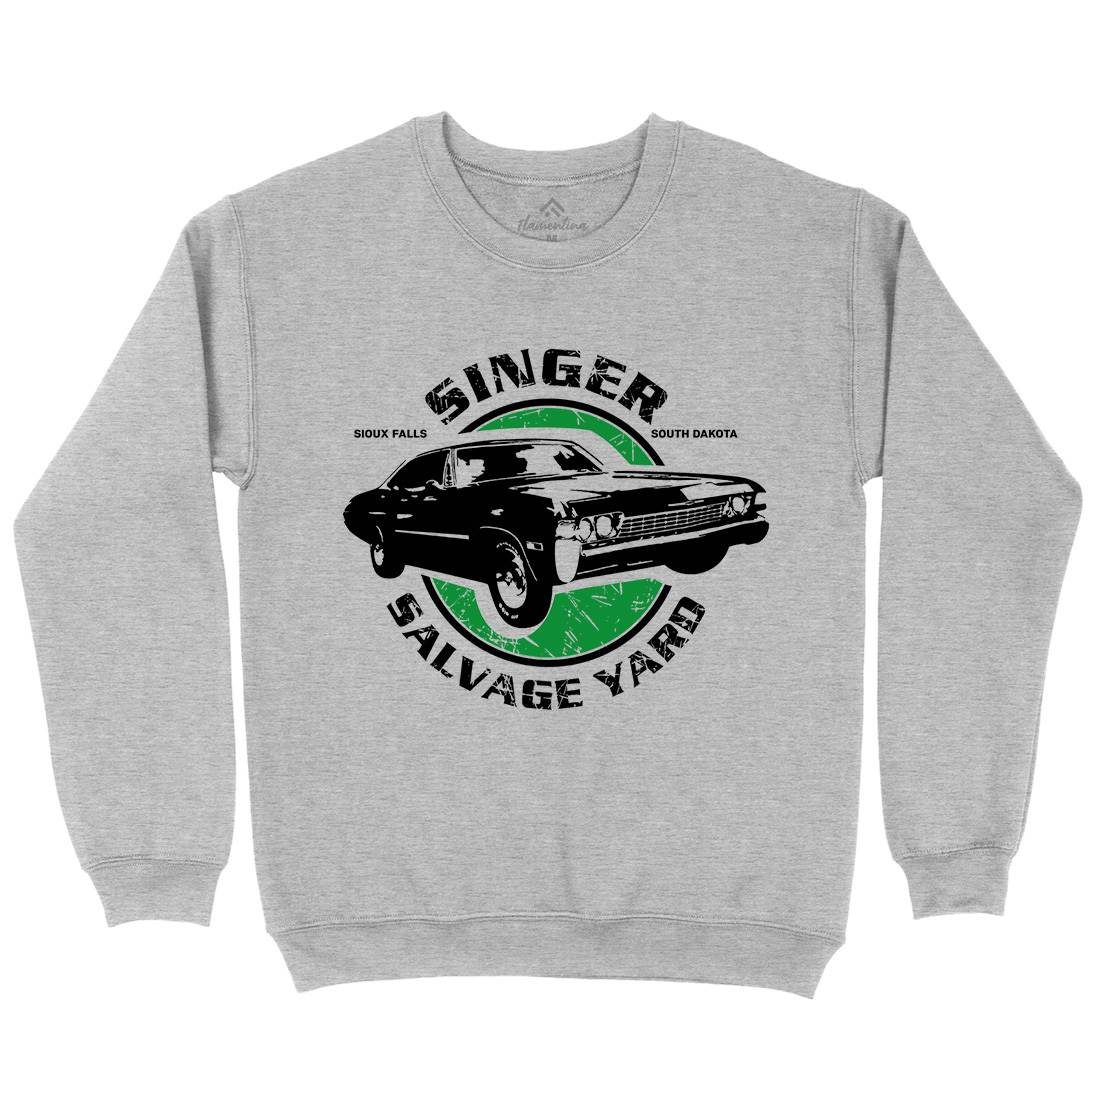 Singer Salvage Yard Kids Crew Neck Sweatshirt Cars D377